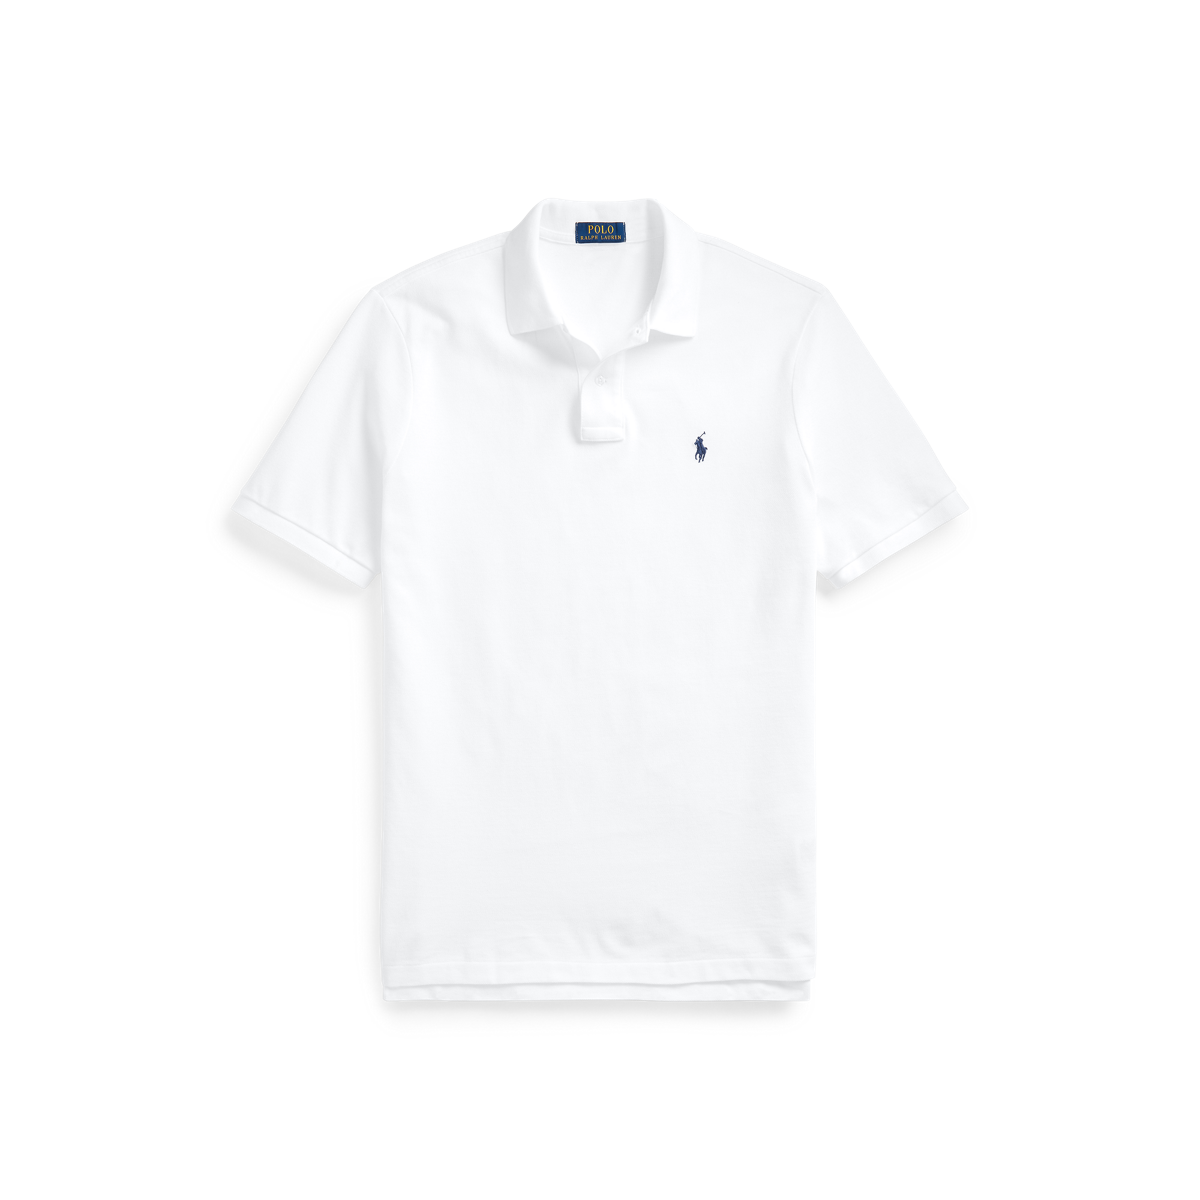 Polo Ralph Lauren Men's Original Fit Mesh Polo Shirt